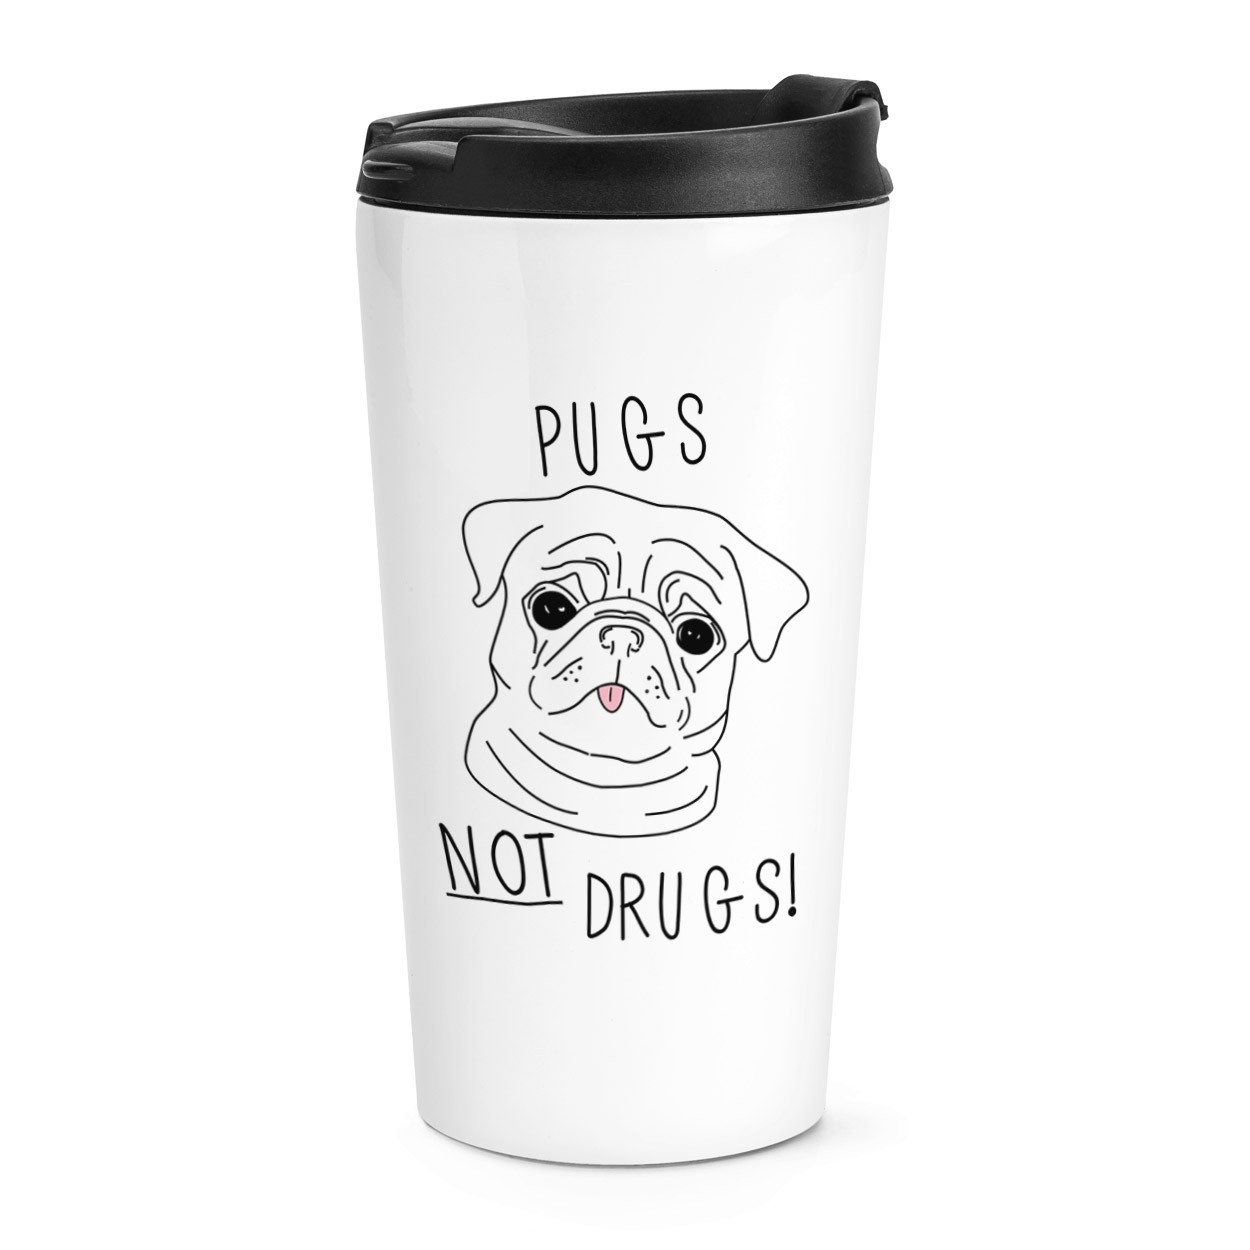 Pugs Not Drugs Travel Mug Cup